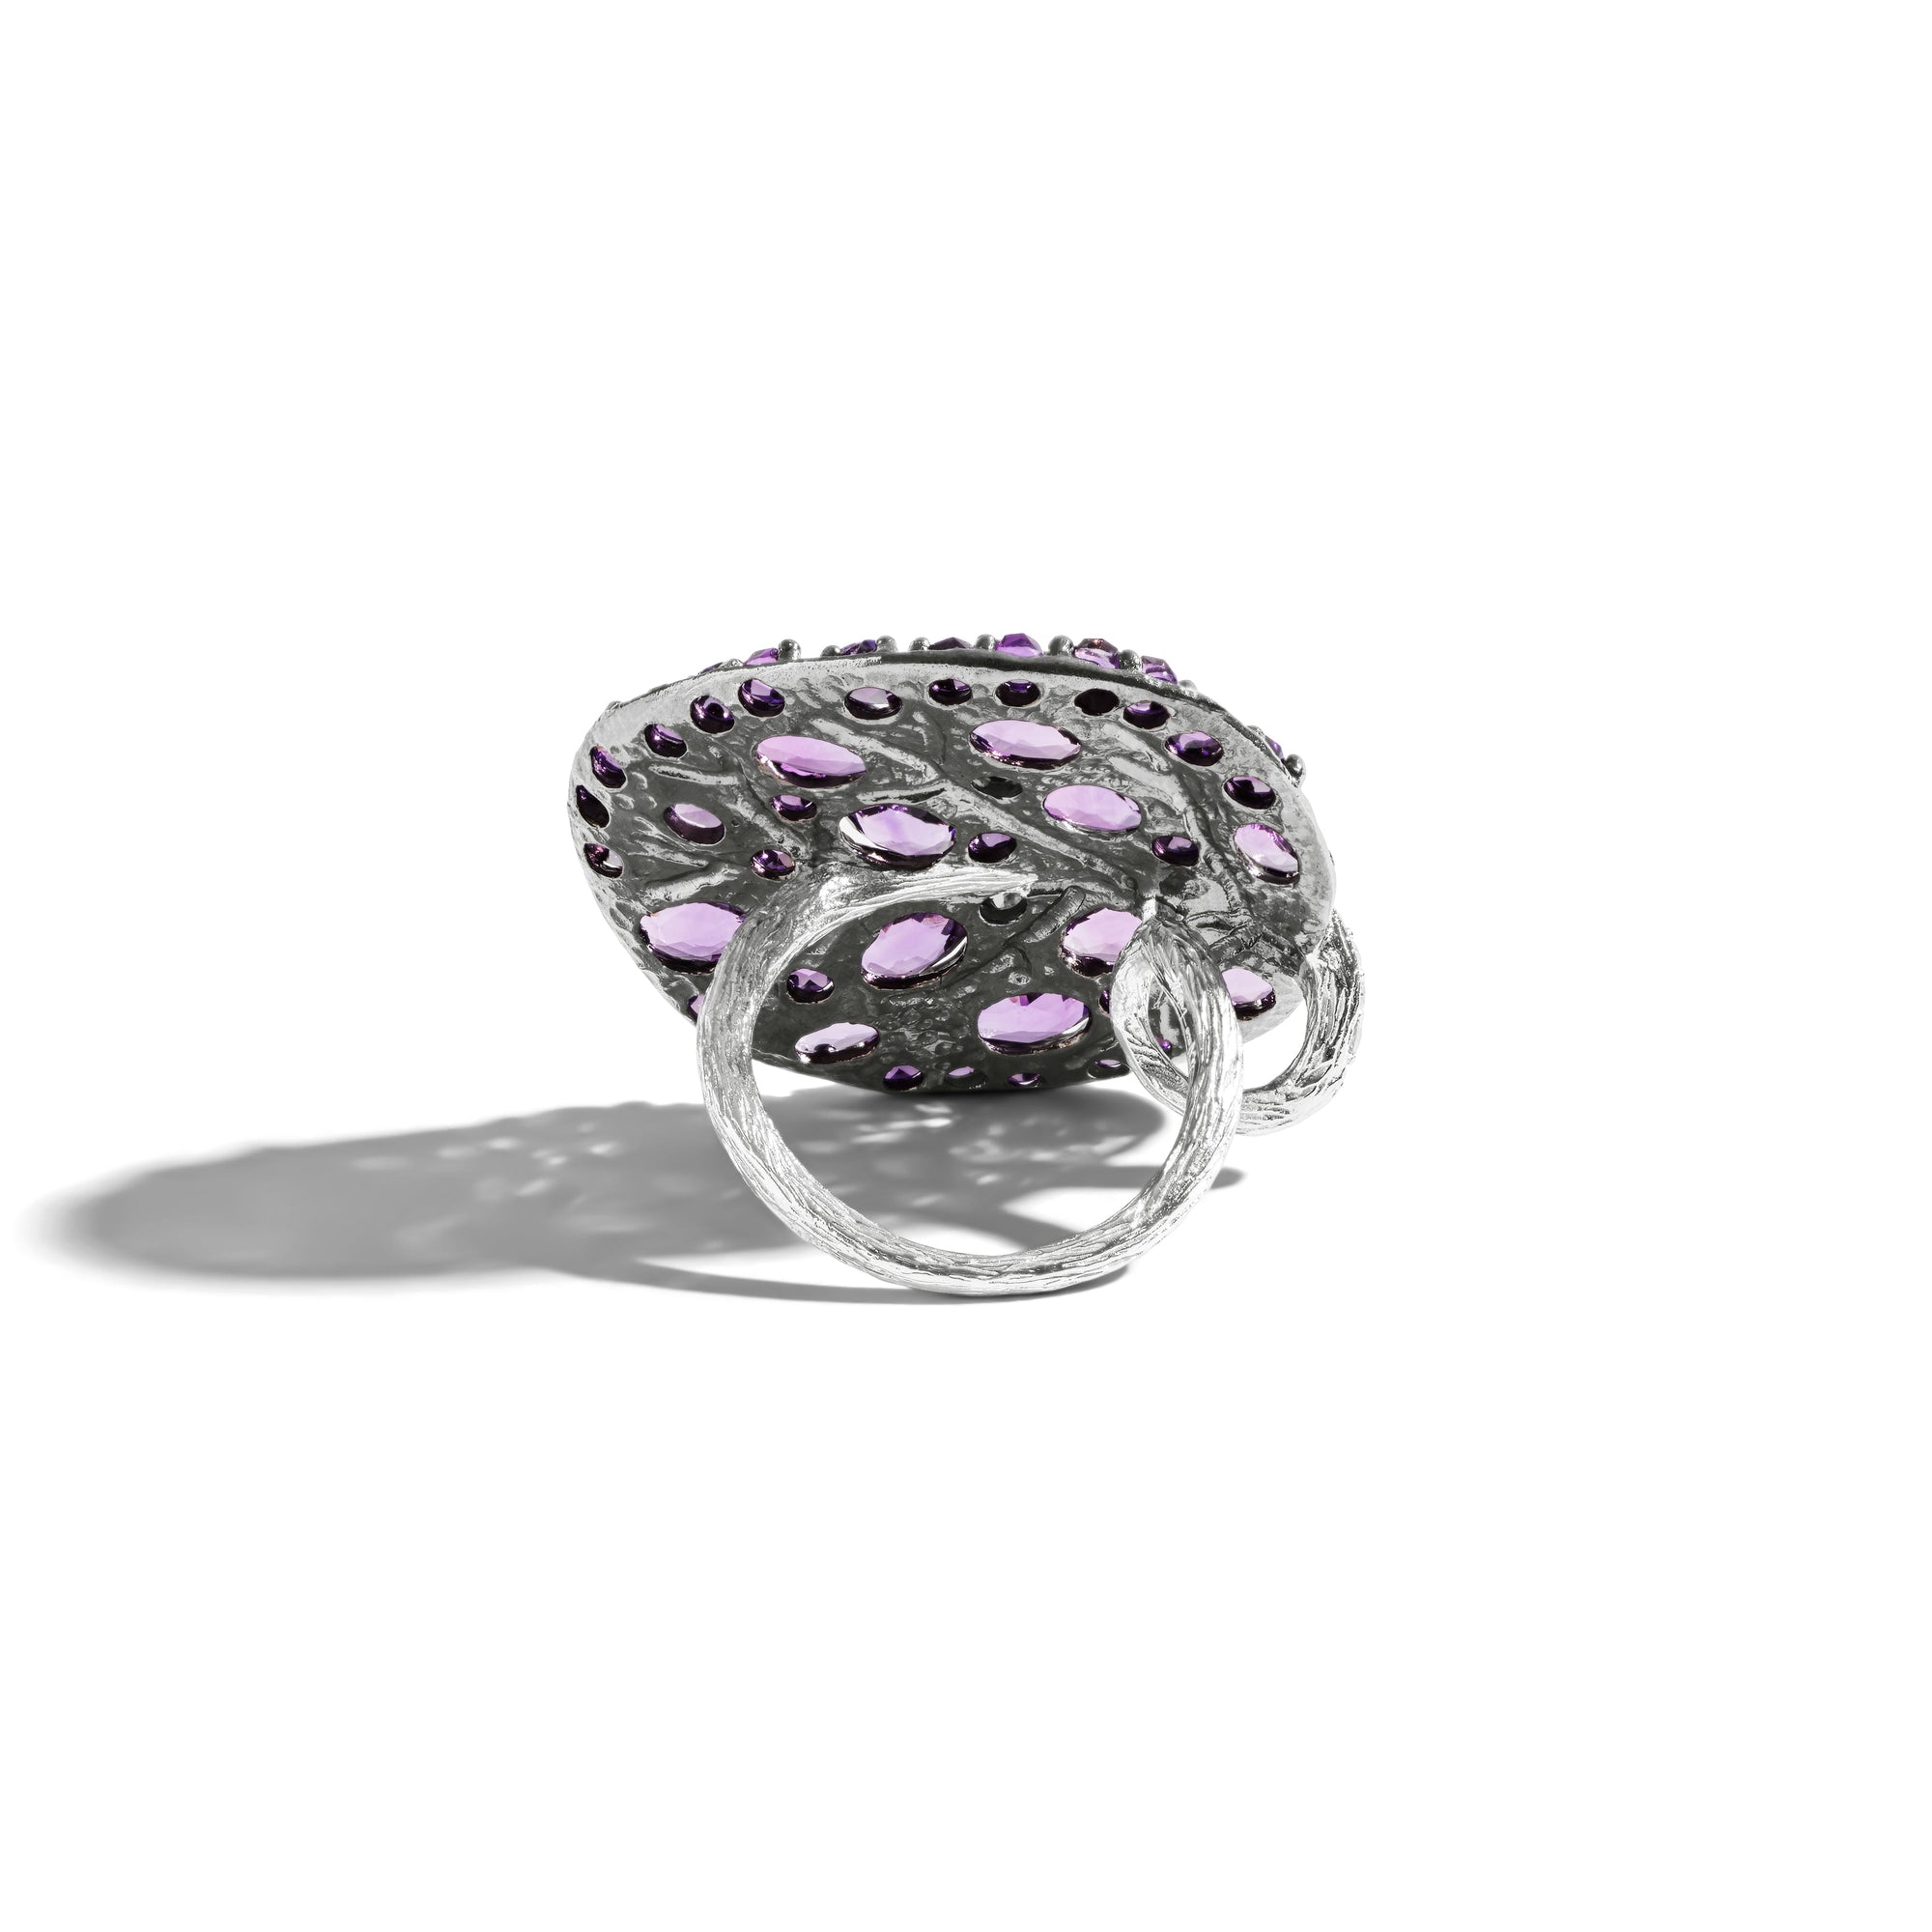 Michael Aram Botanical Leaf 31mm Ring with Amethyst and Diamonds